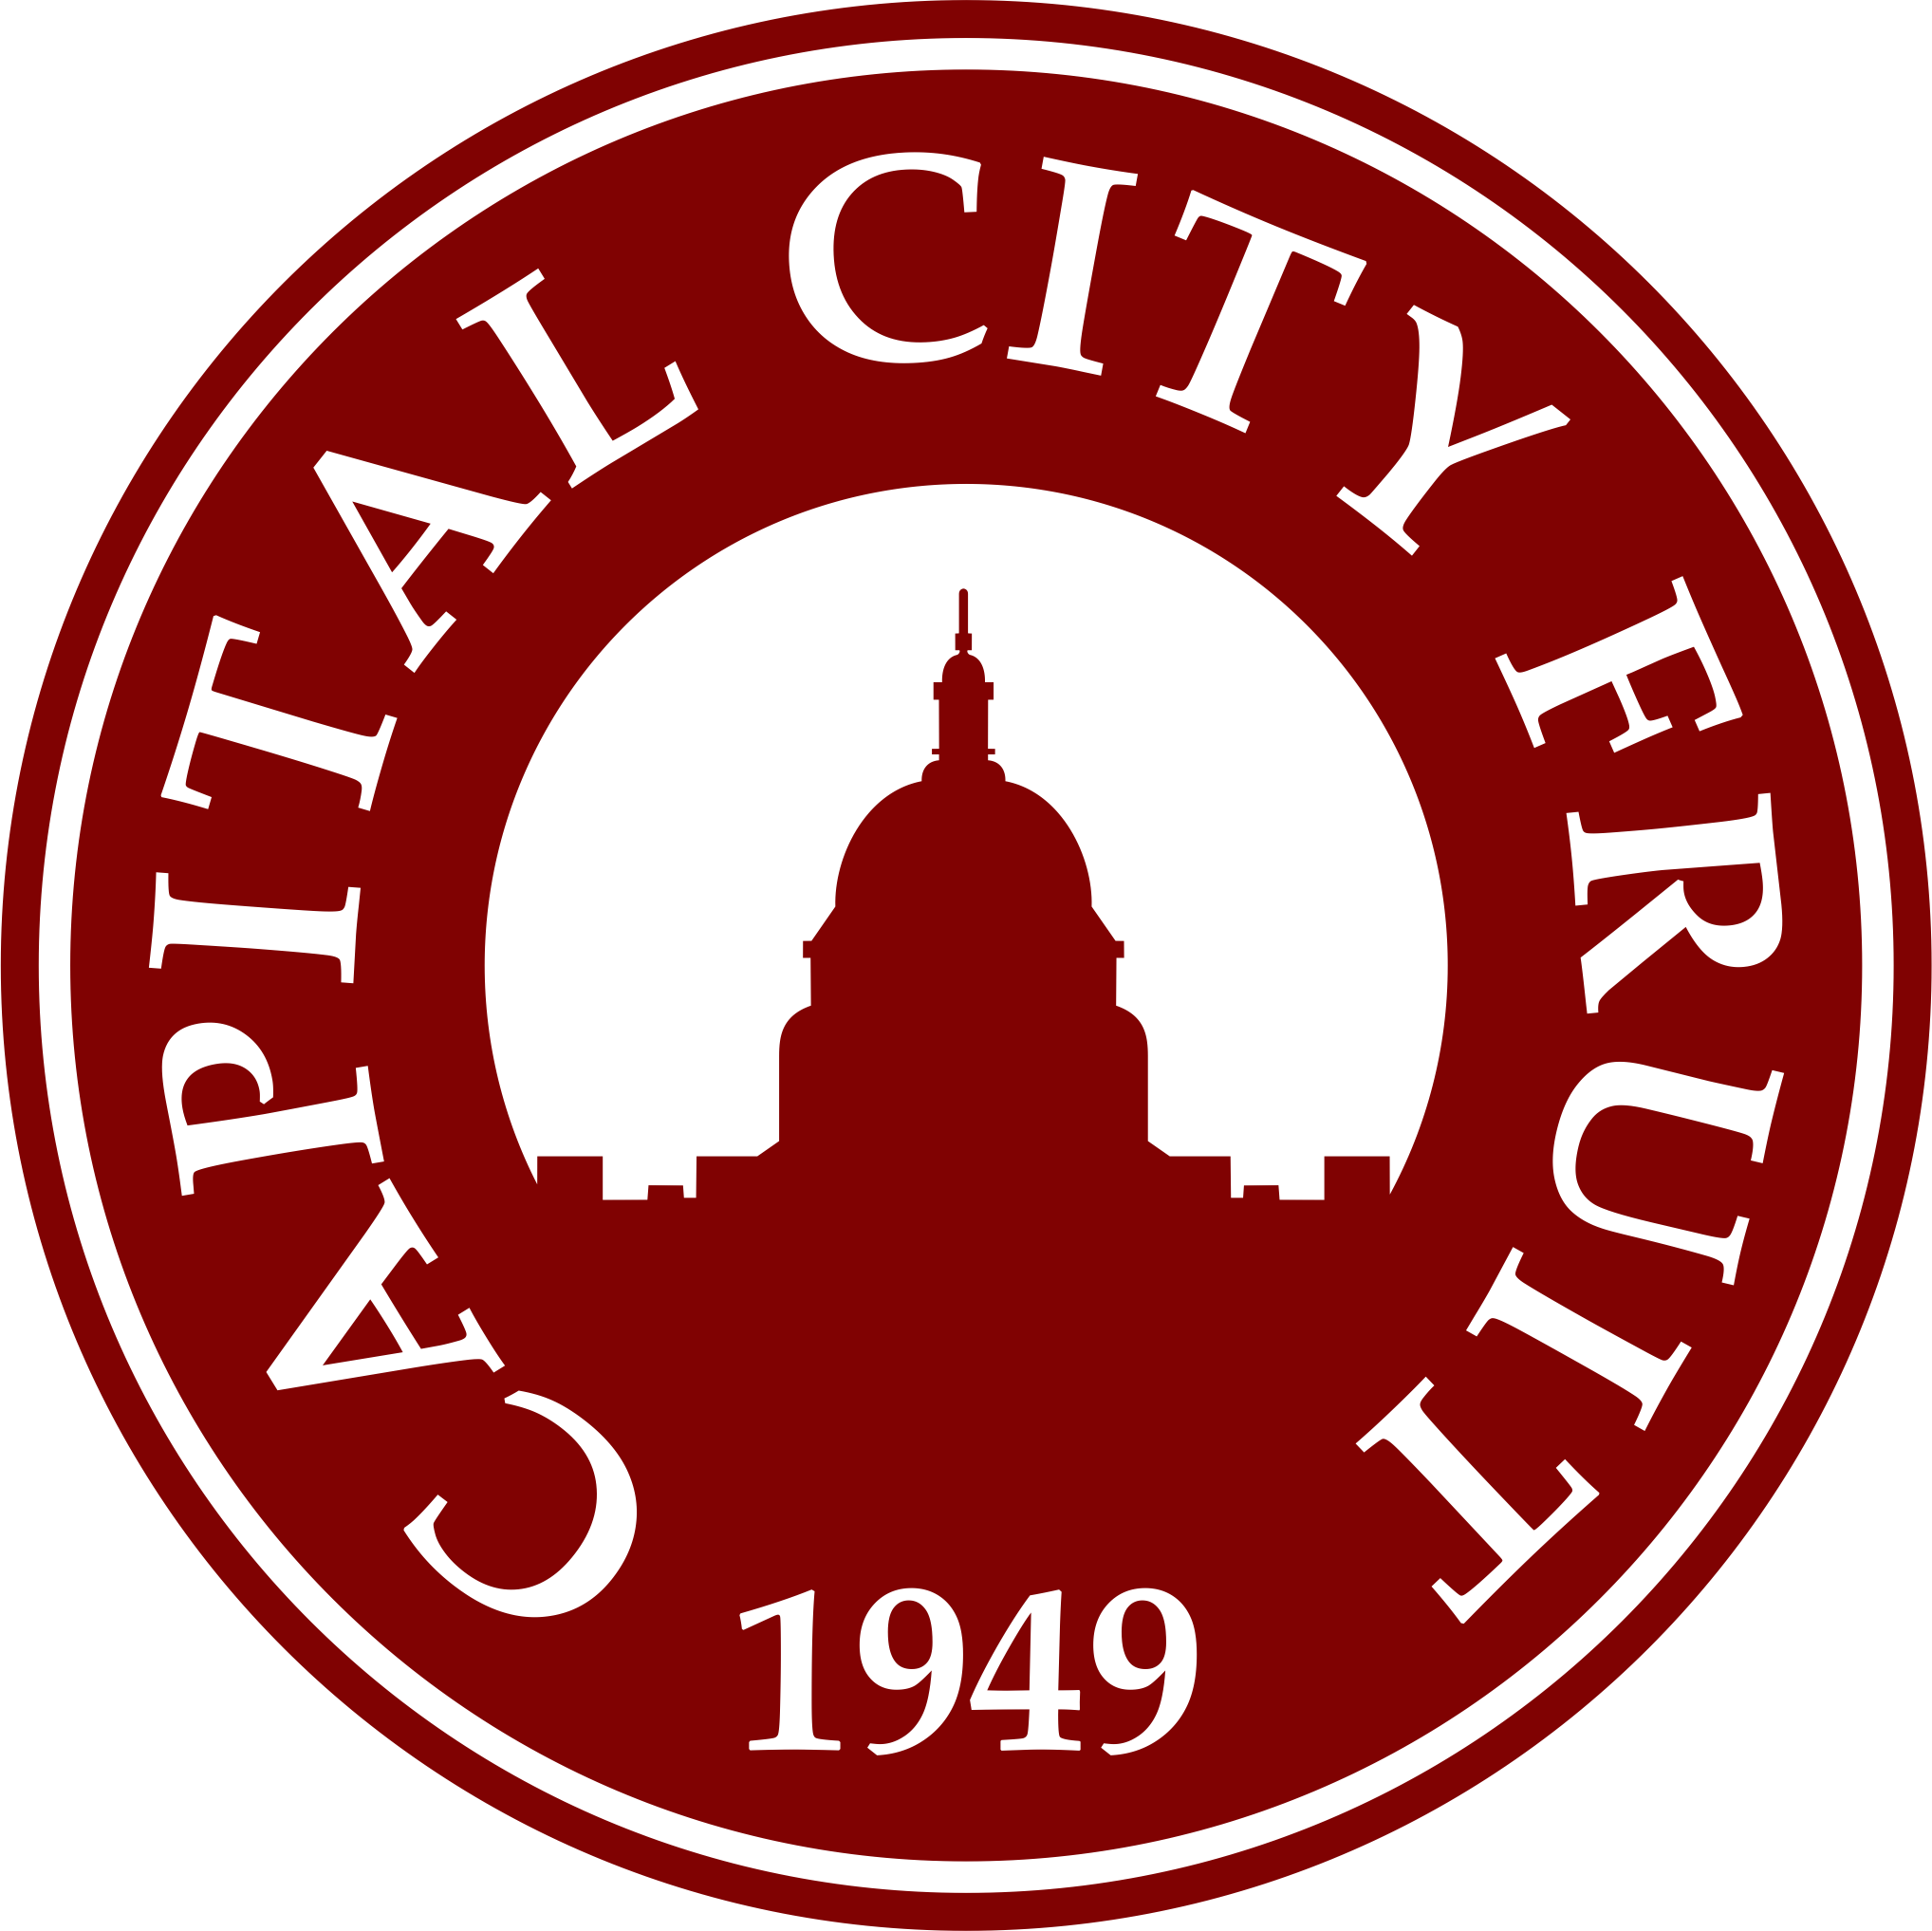 Capital City Fruit Inc